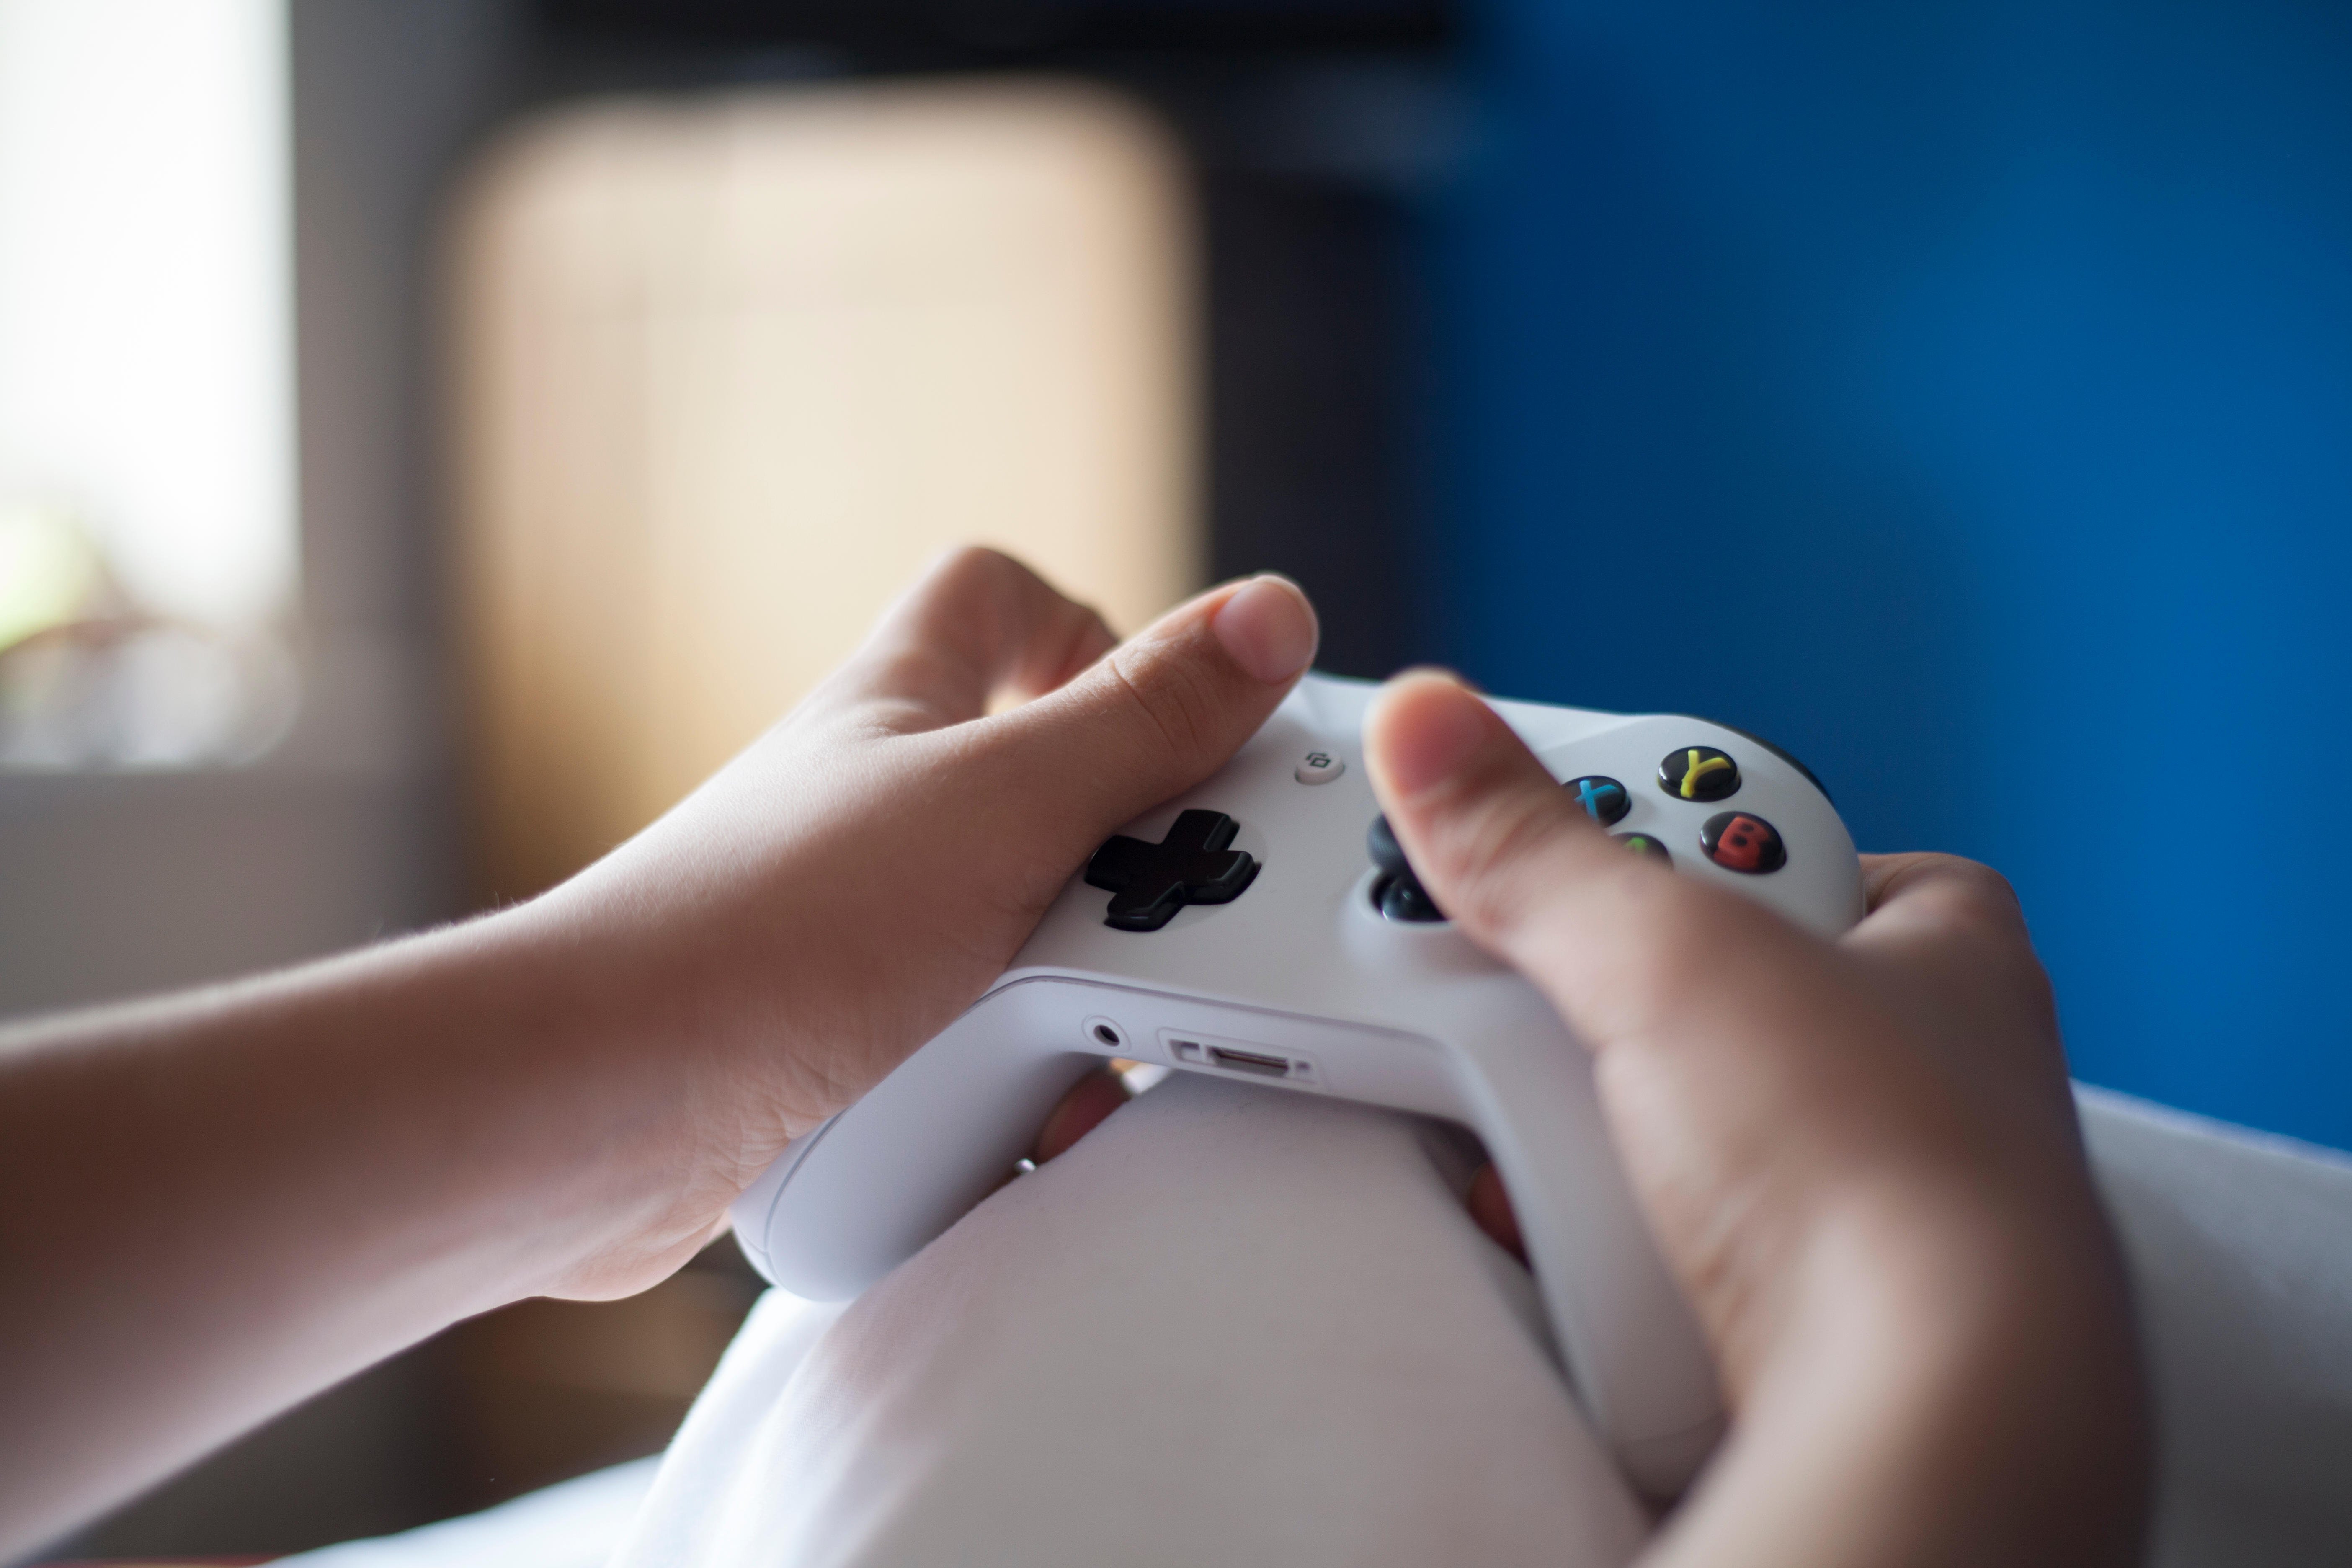 Safer Internet Day: 5 ways to keep children’s online gaming safe